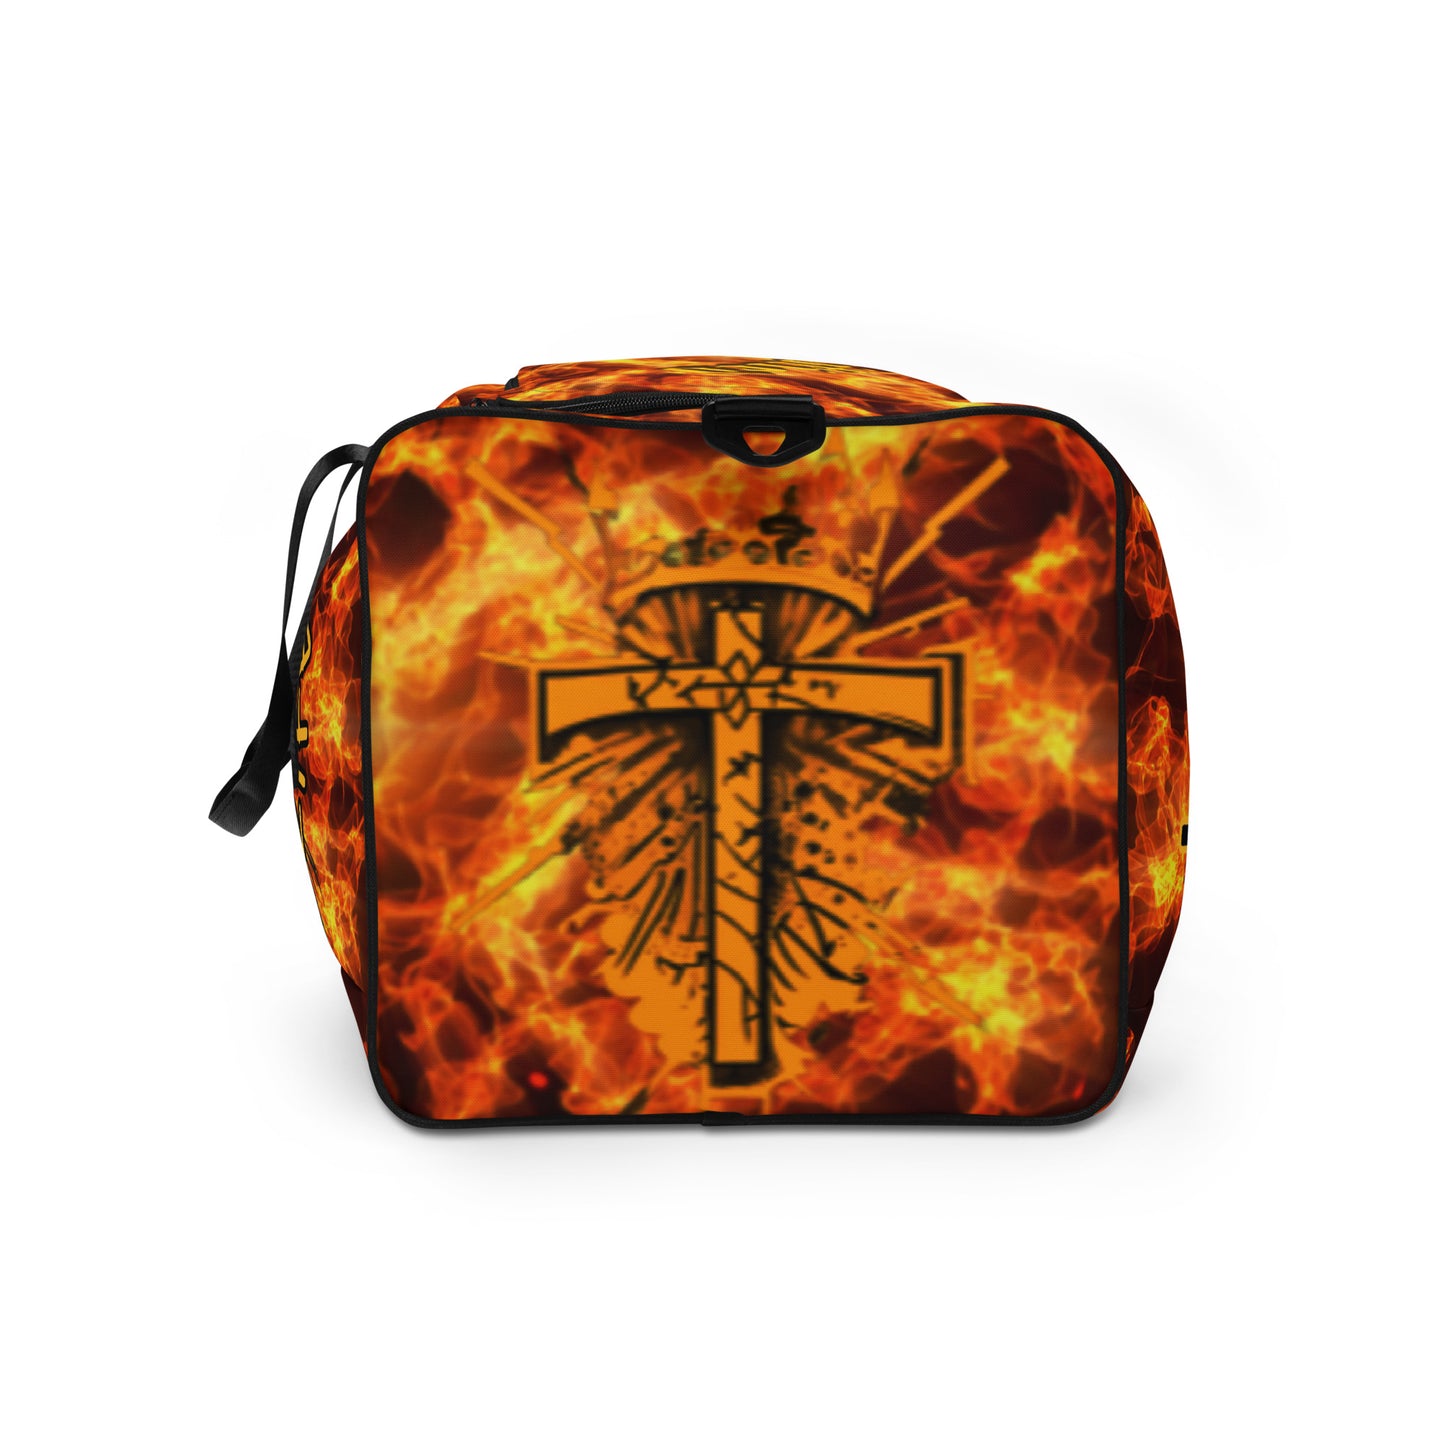 Jesus Fan 4Life- Football Duffle bag